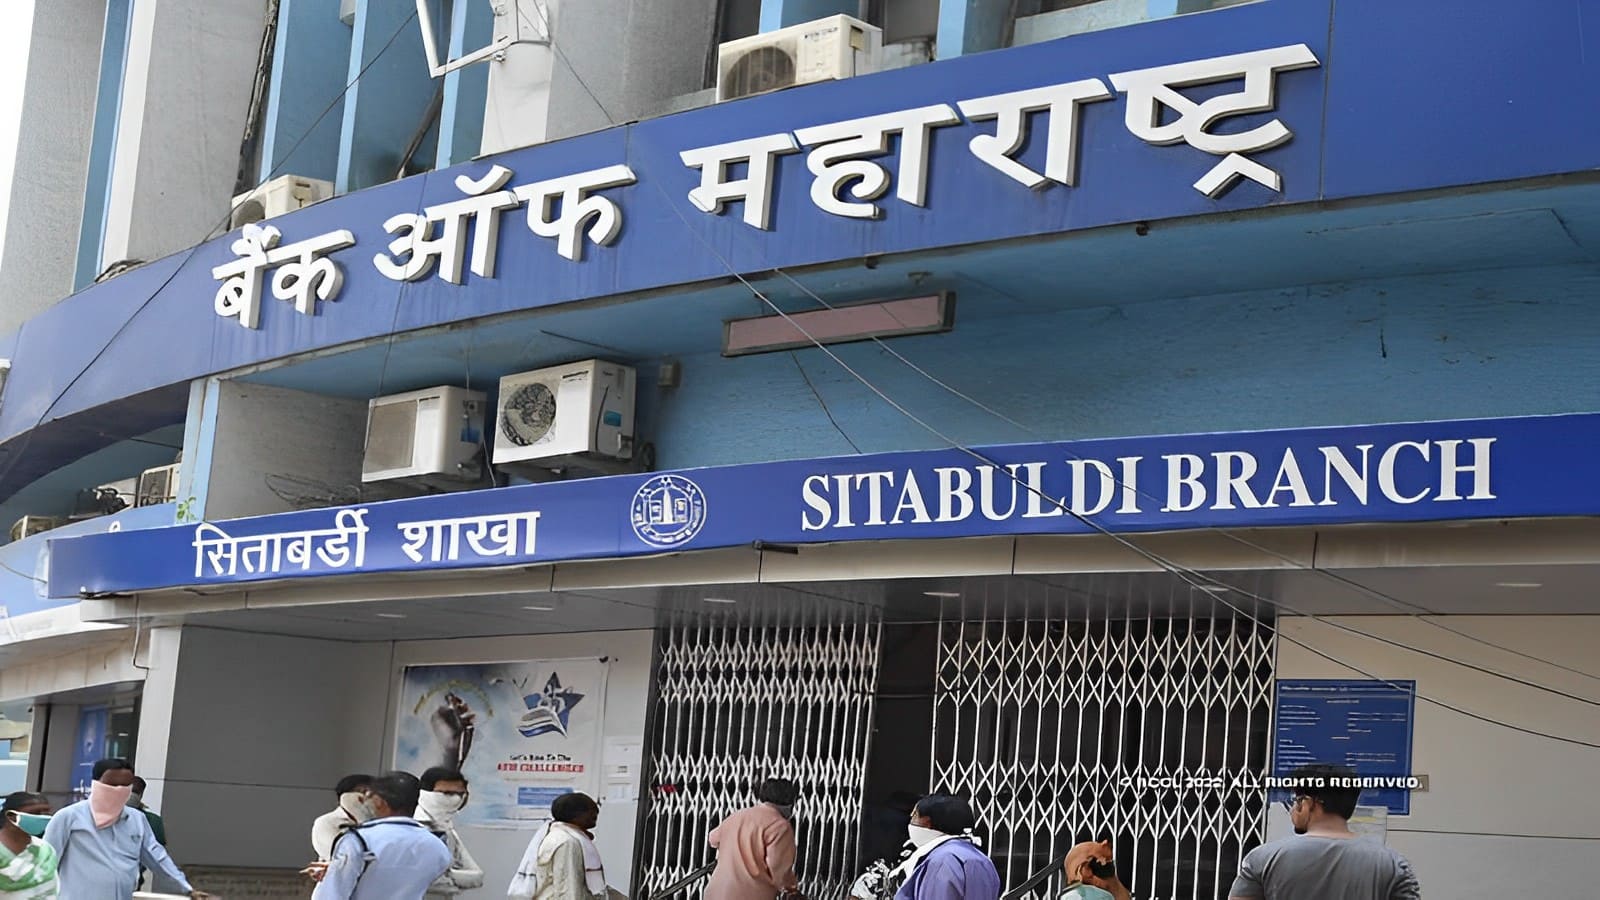 Bank of Maharashtra raises deposit rates by up to 125 bps